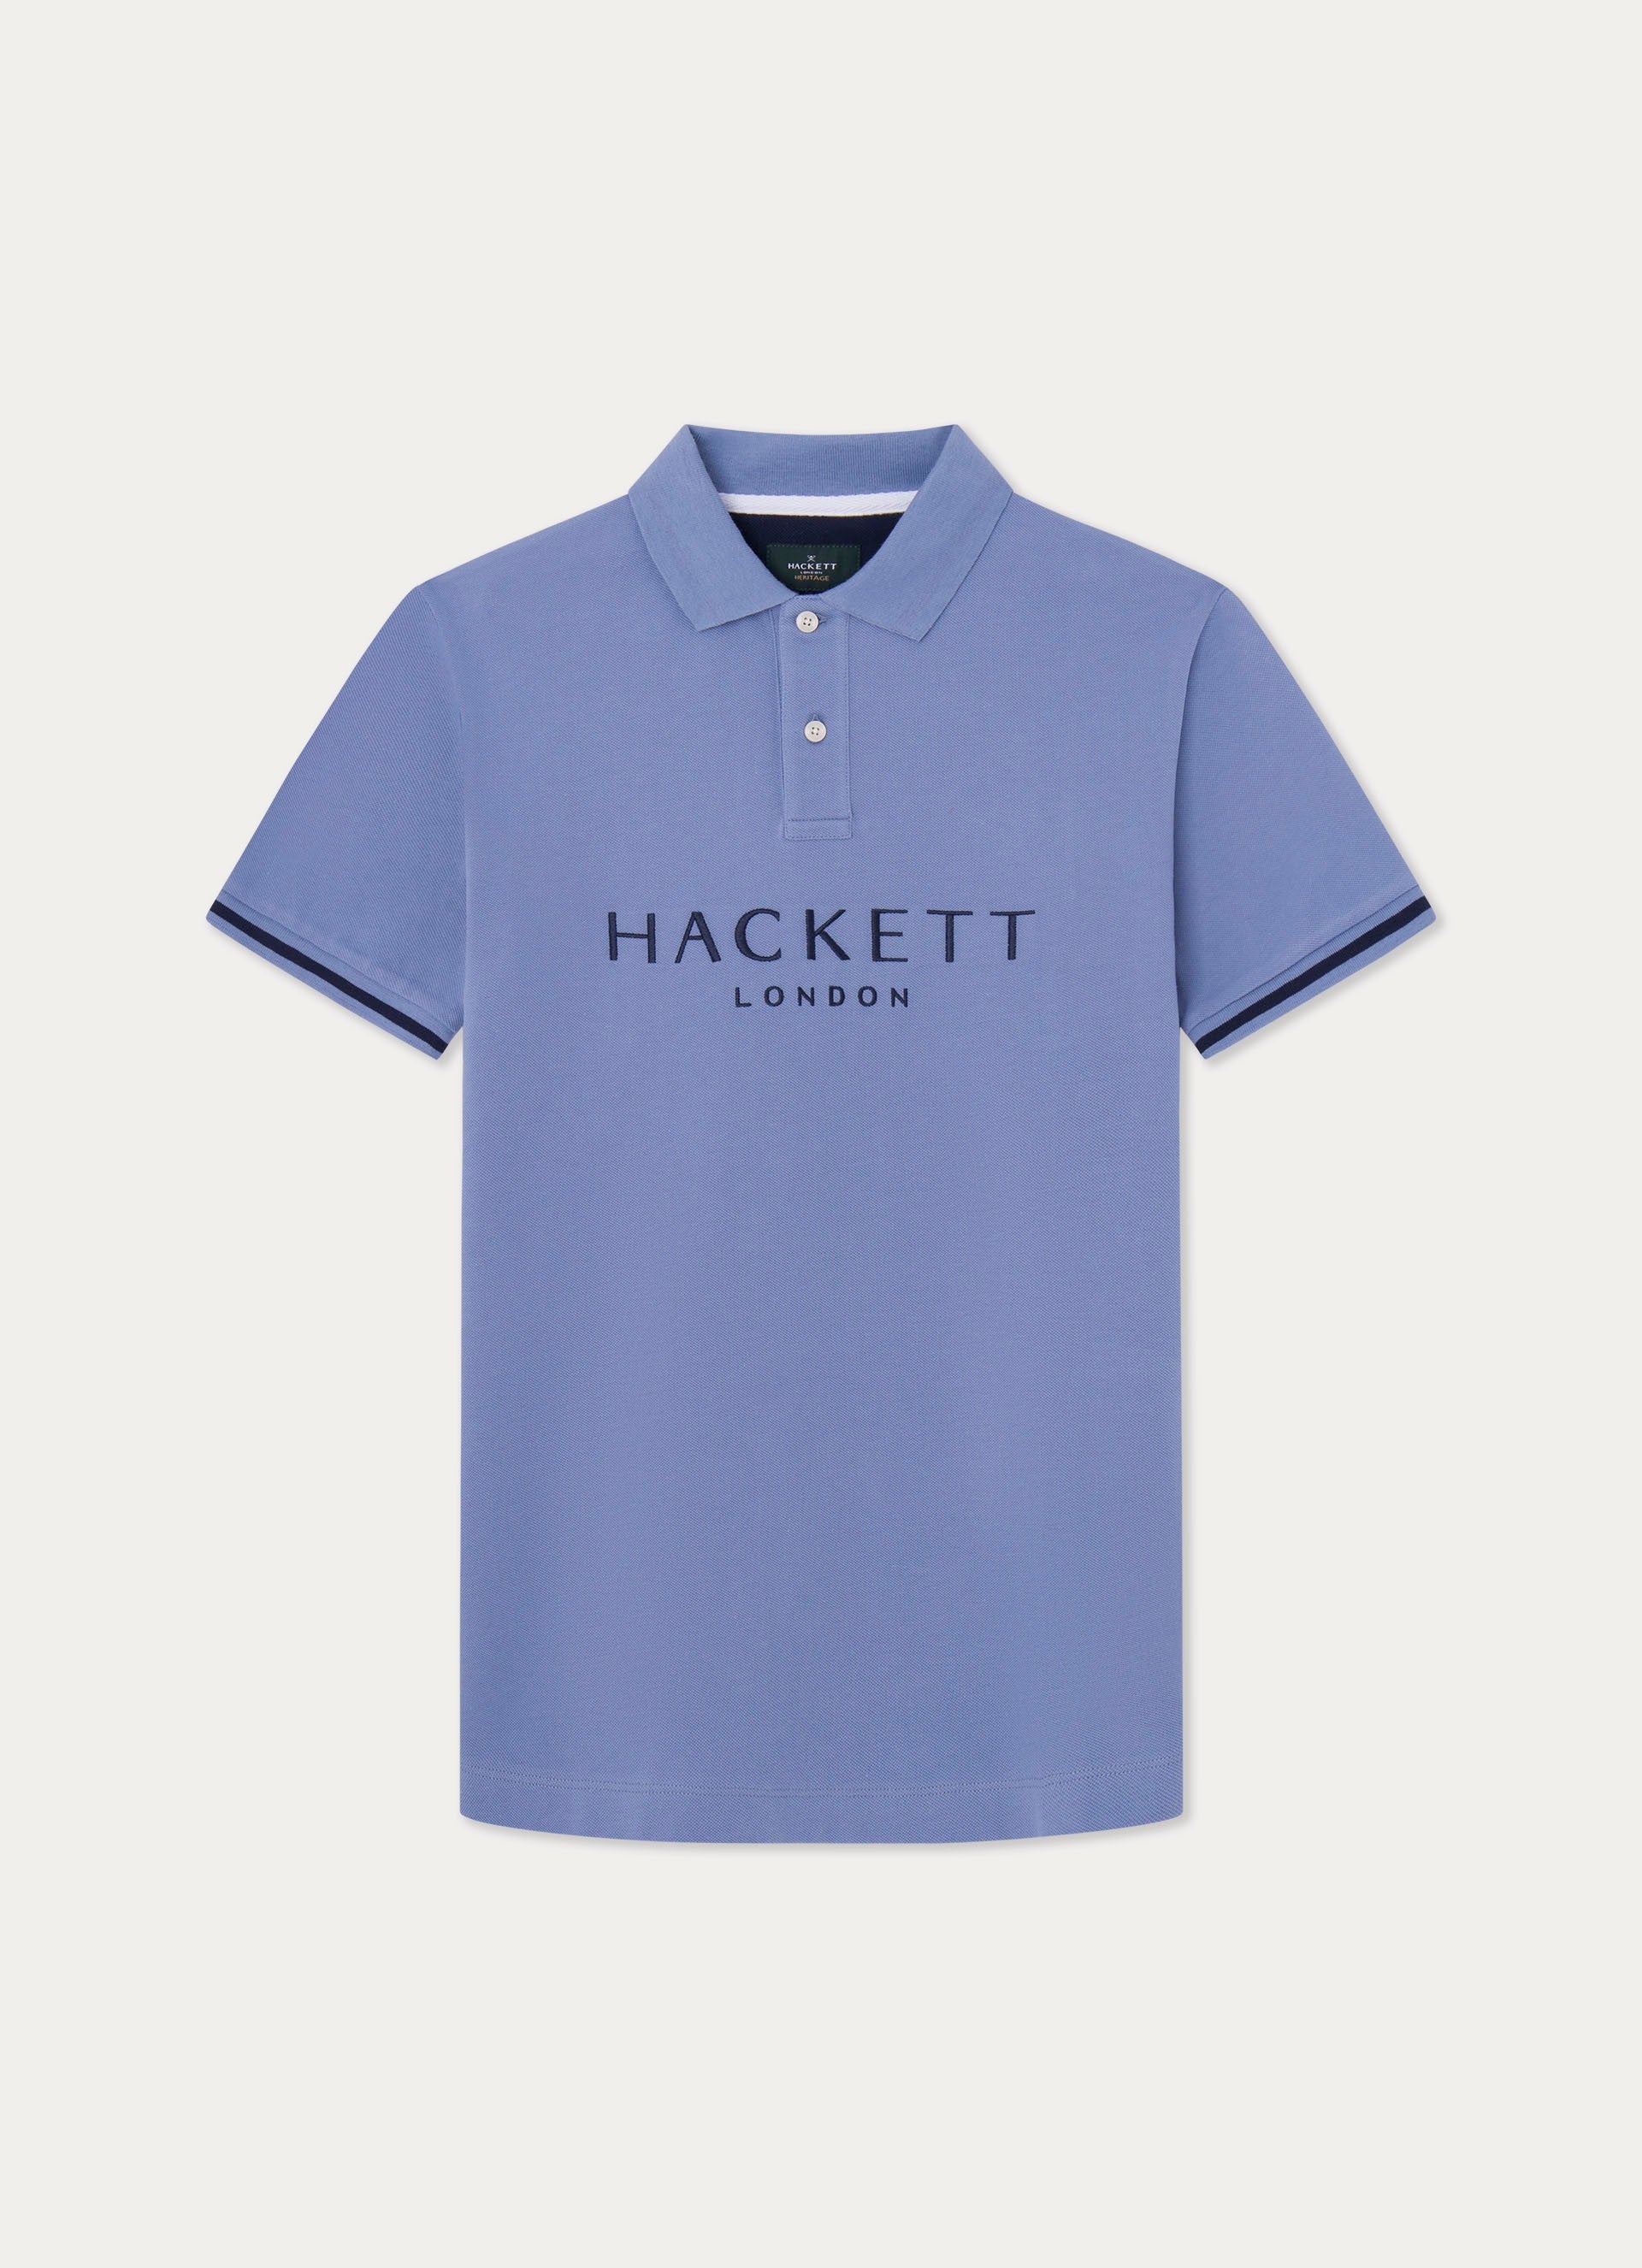 Hackett Heritage Classic Polo Shirt